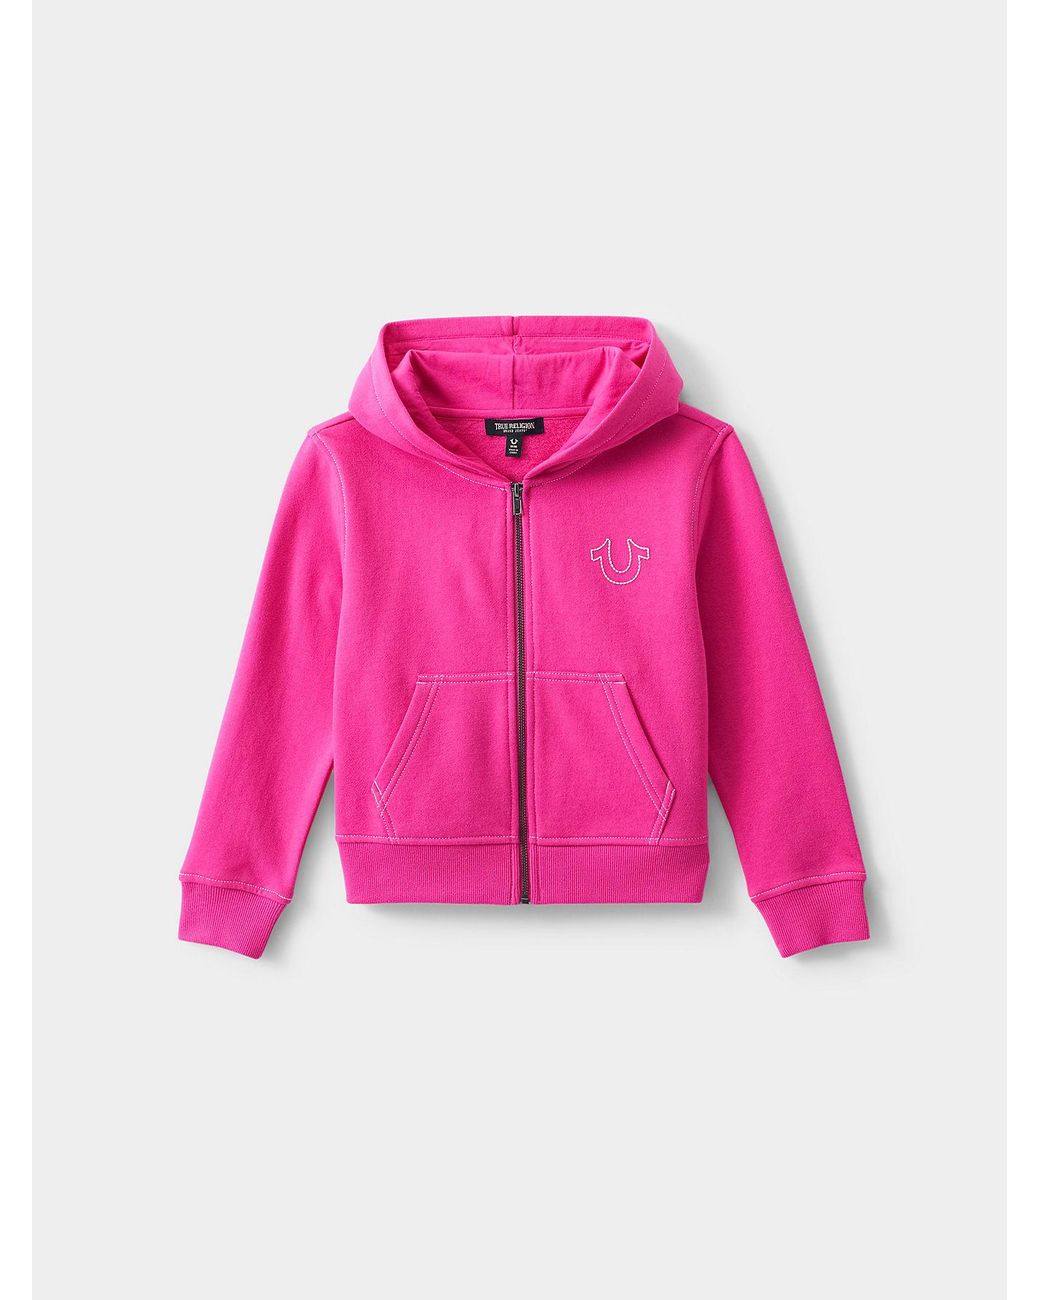 True Religion Girls Logo Zip Hoodie in Pink | Lyst